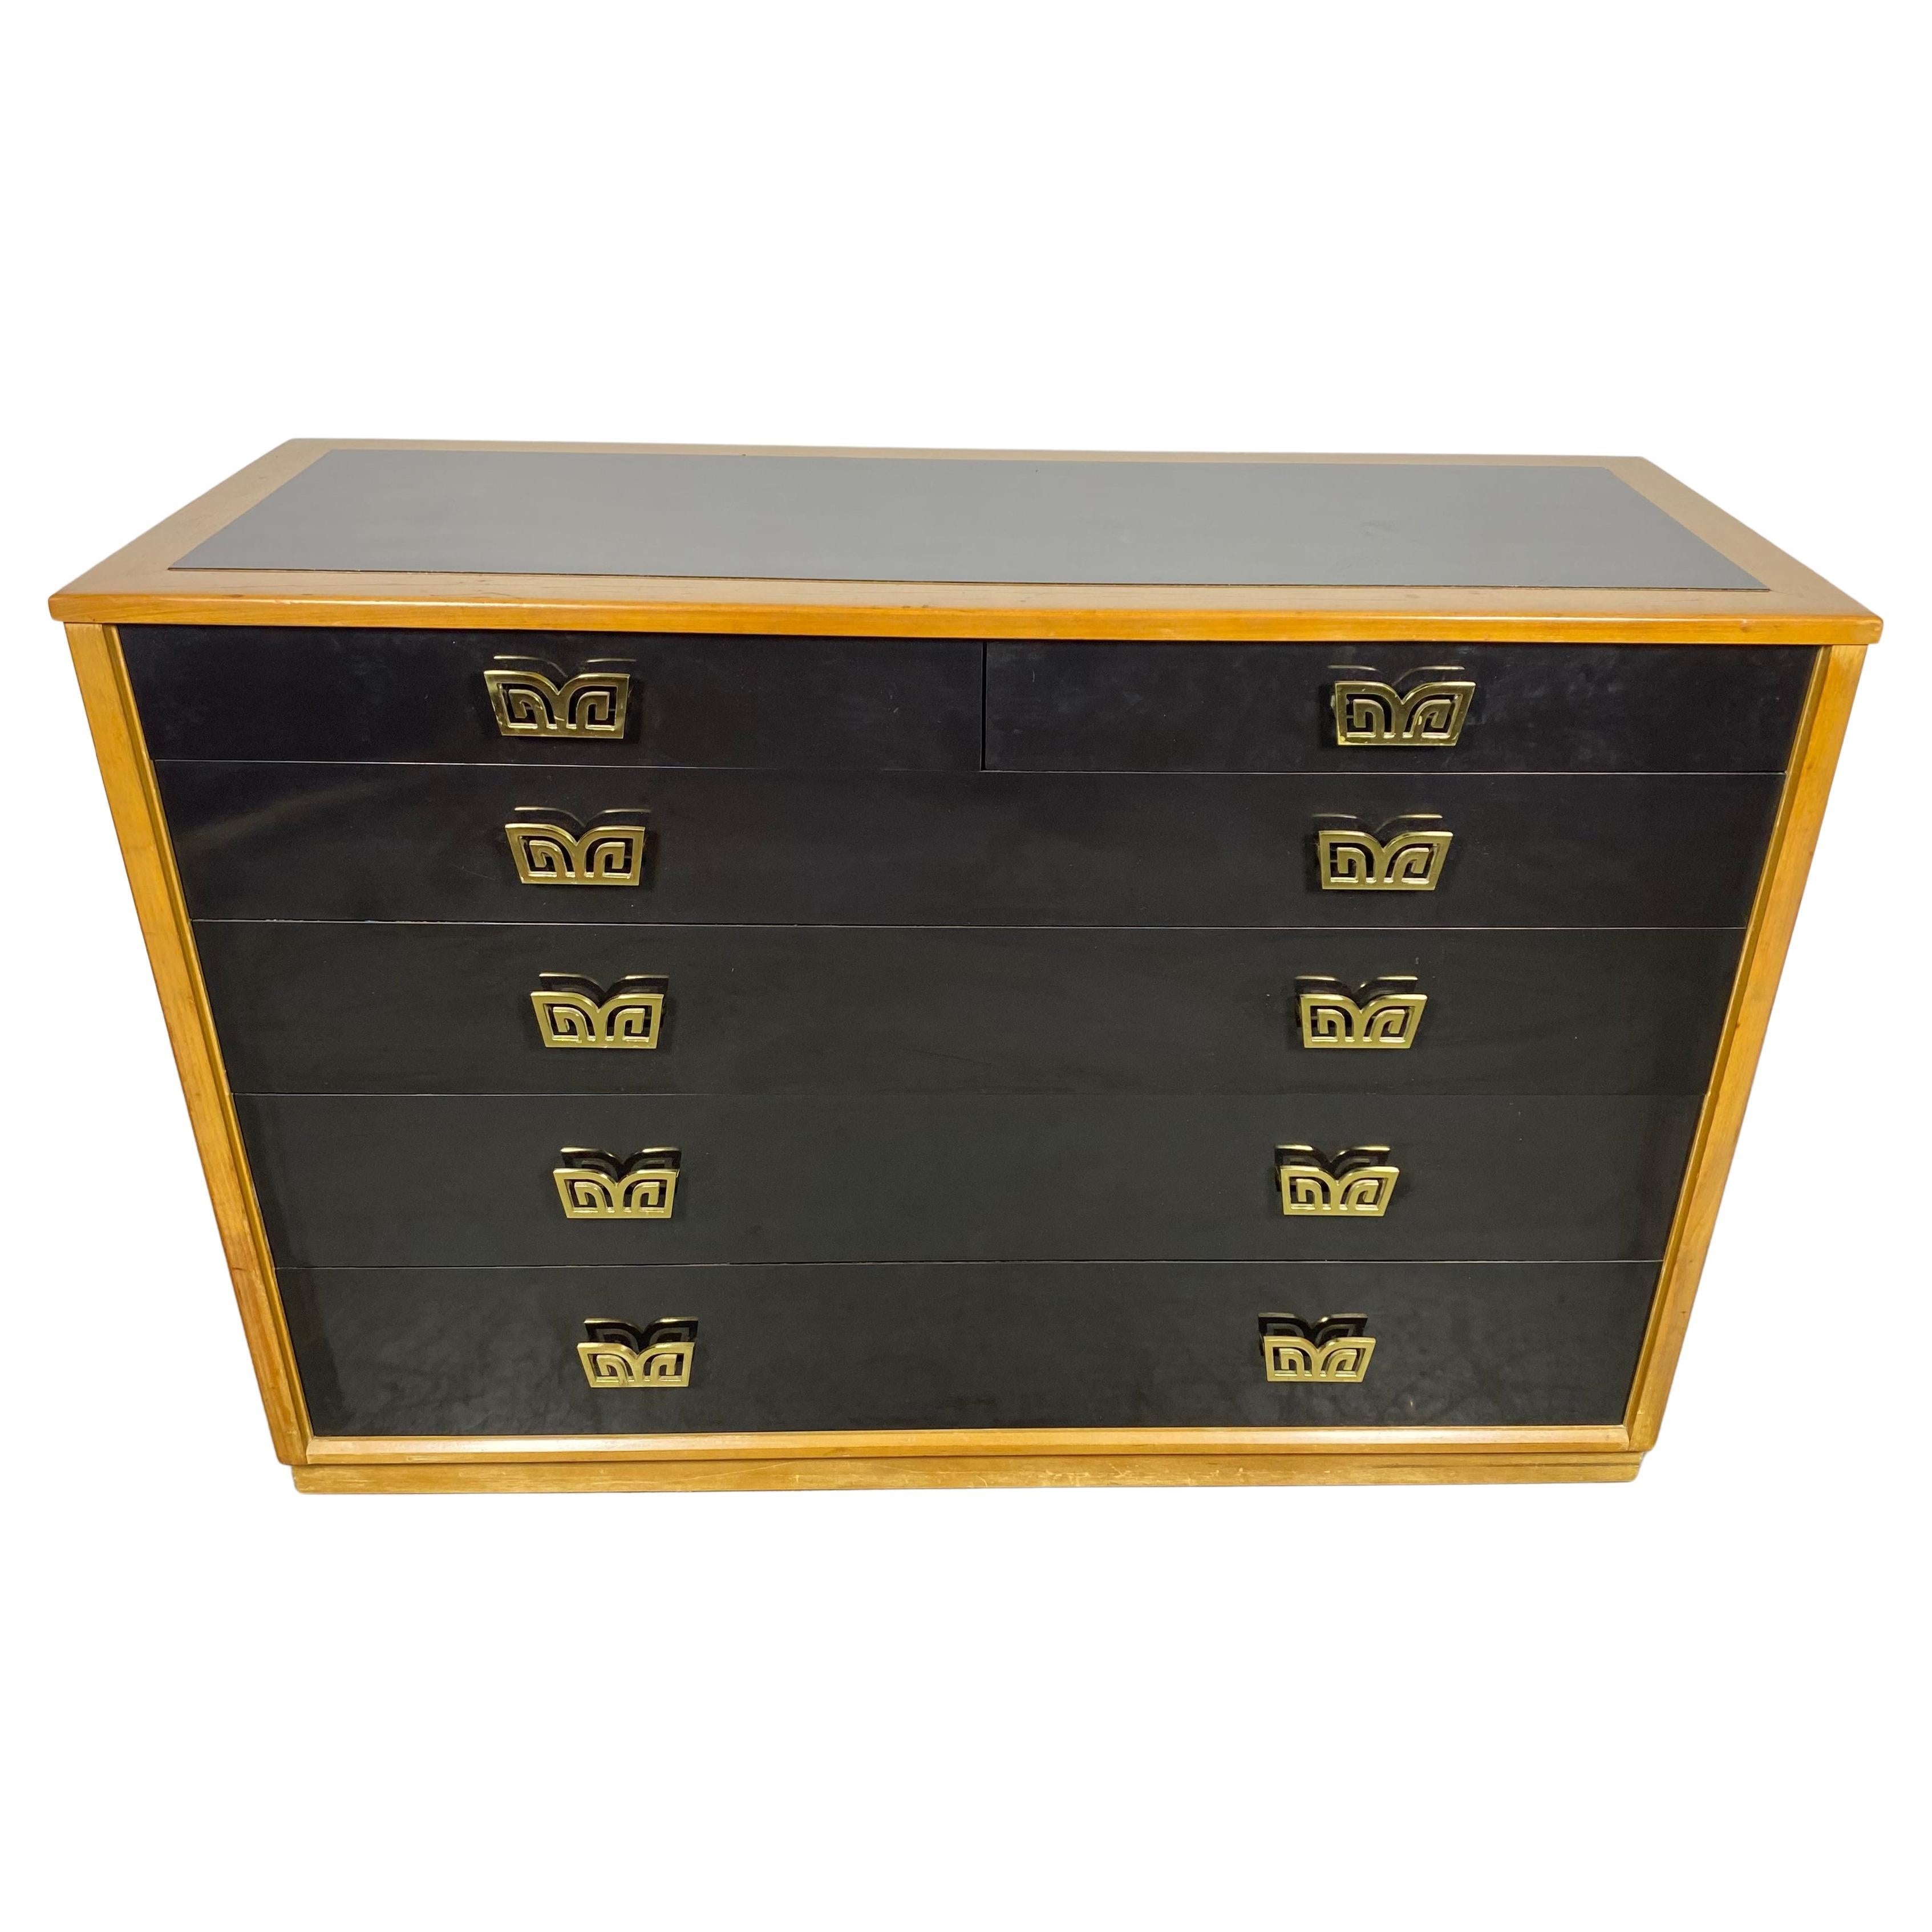  Edward Wormley Precedent Dresser for Drexel, stunning custom hardware / finish